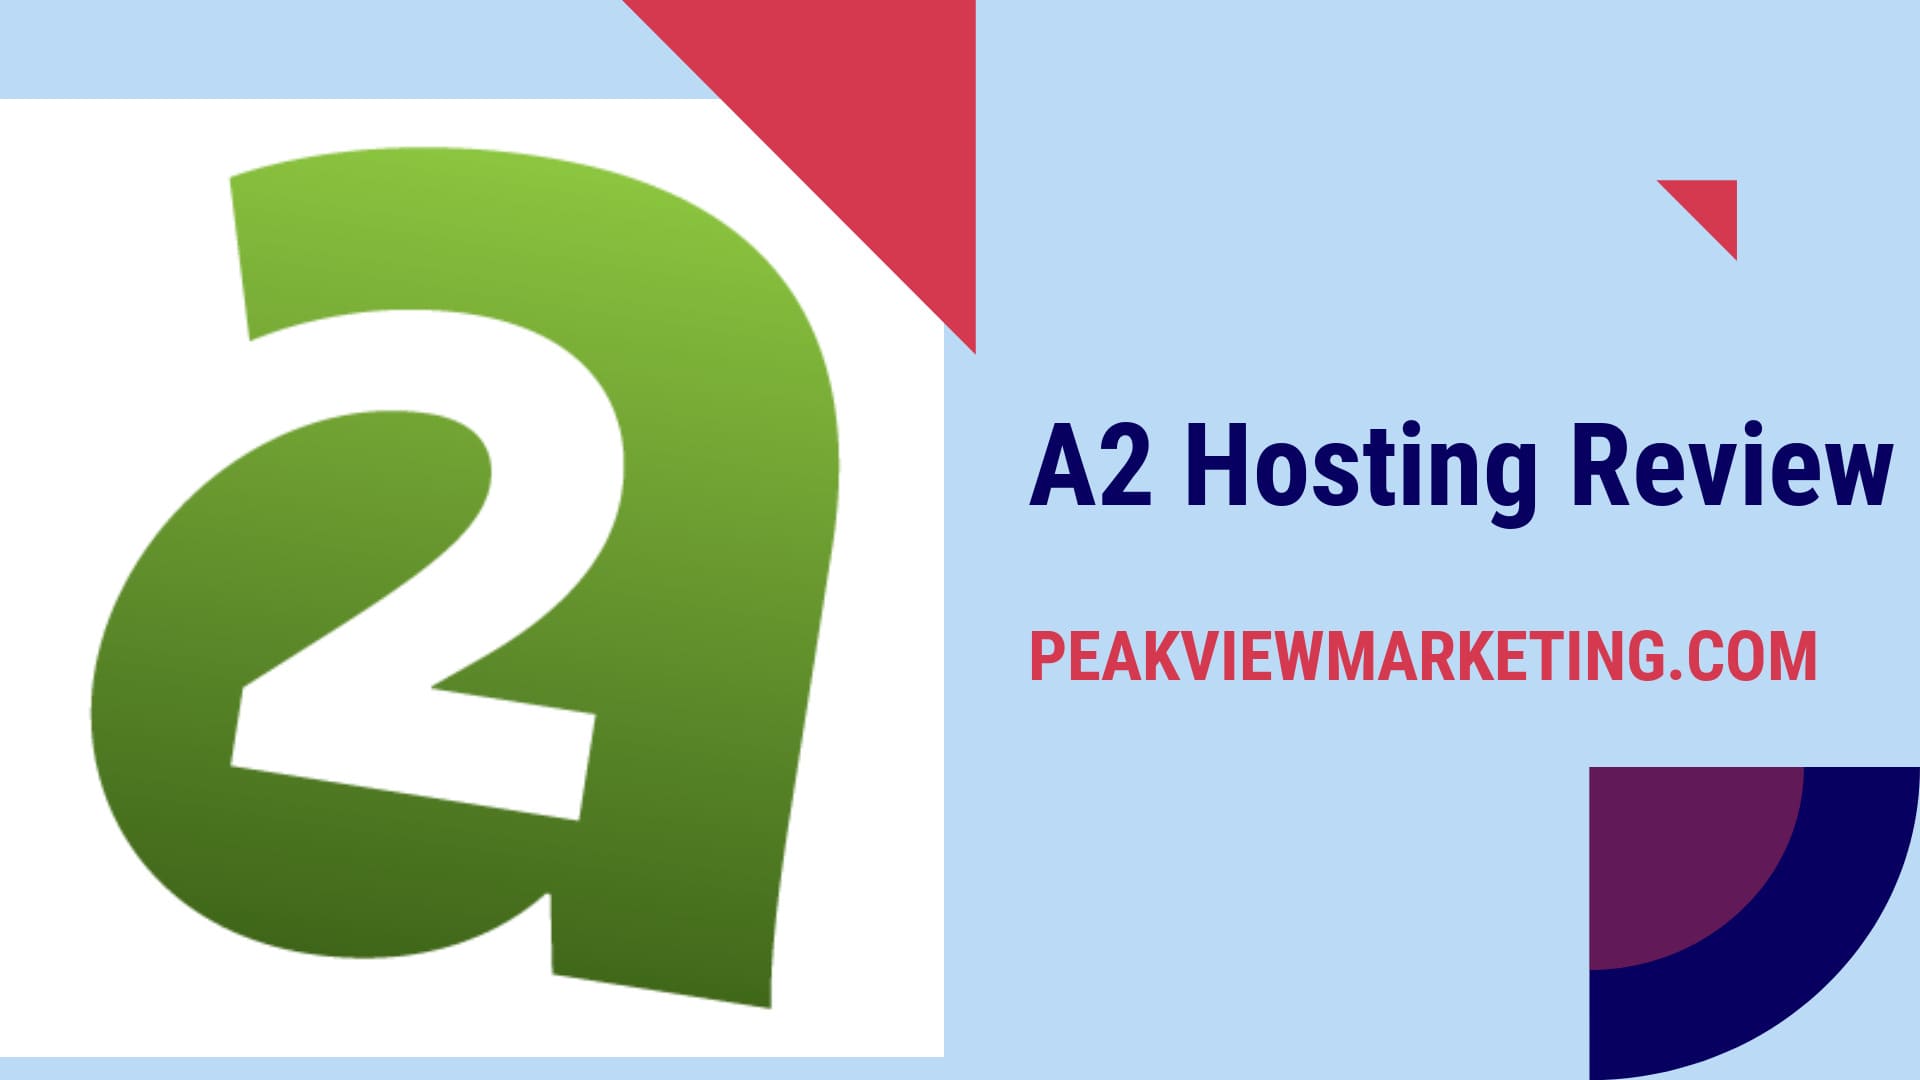 A2 Hosting Review Image